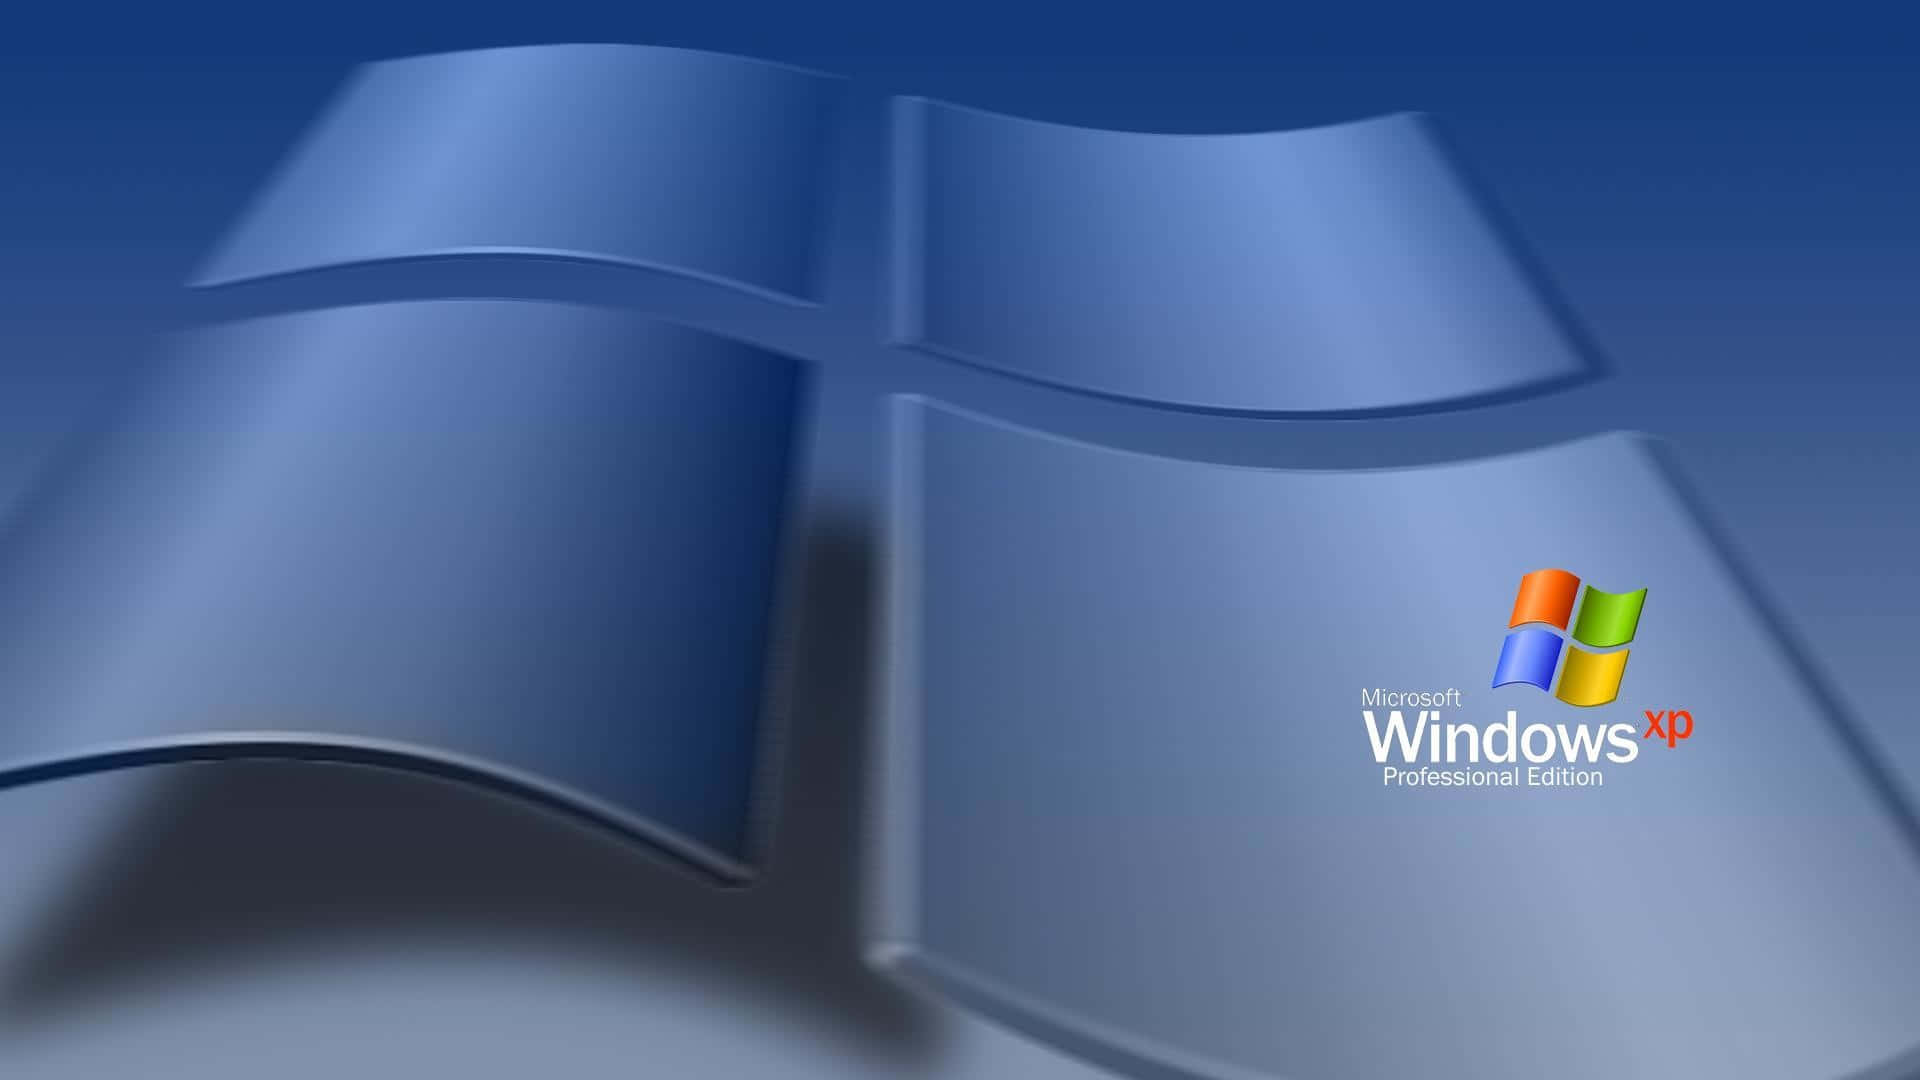 Microsoftwindows Xp-logotypen Wallpaper